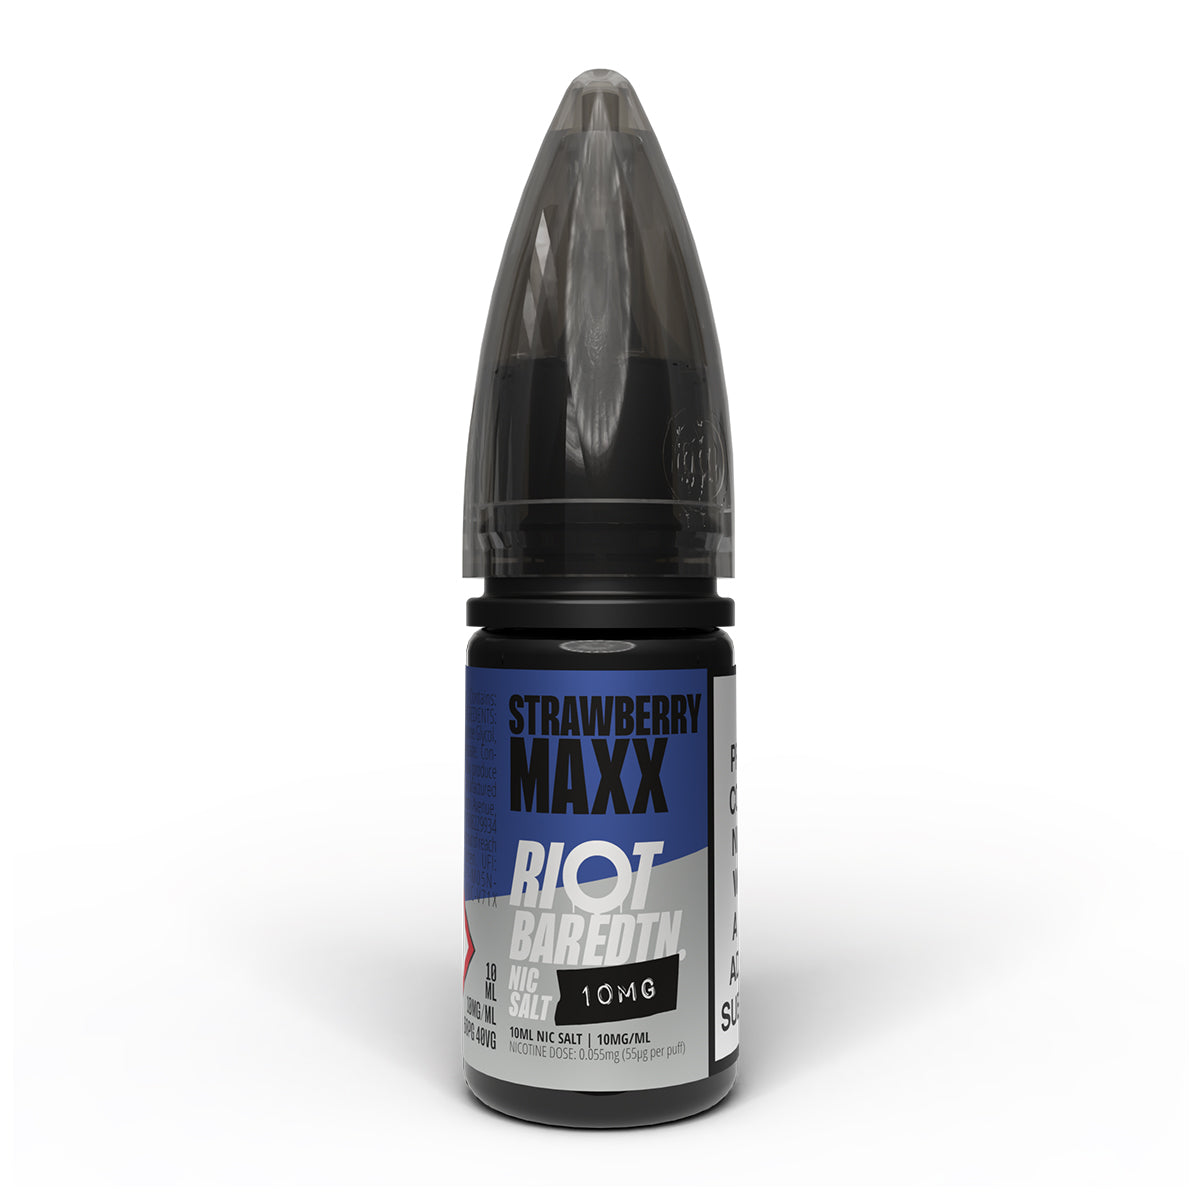 Strawberry Maxx 10ml Nicotine Salt 10mg by Riot Bar Edtn